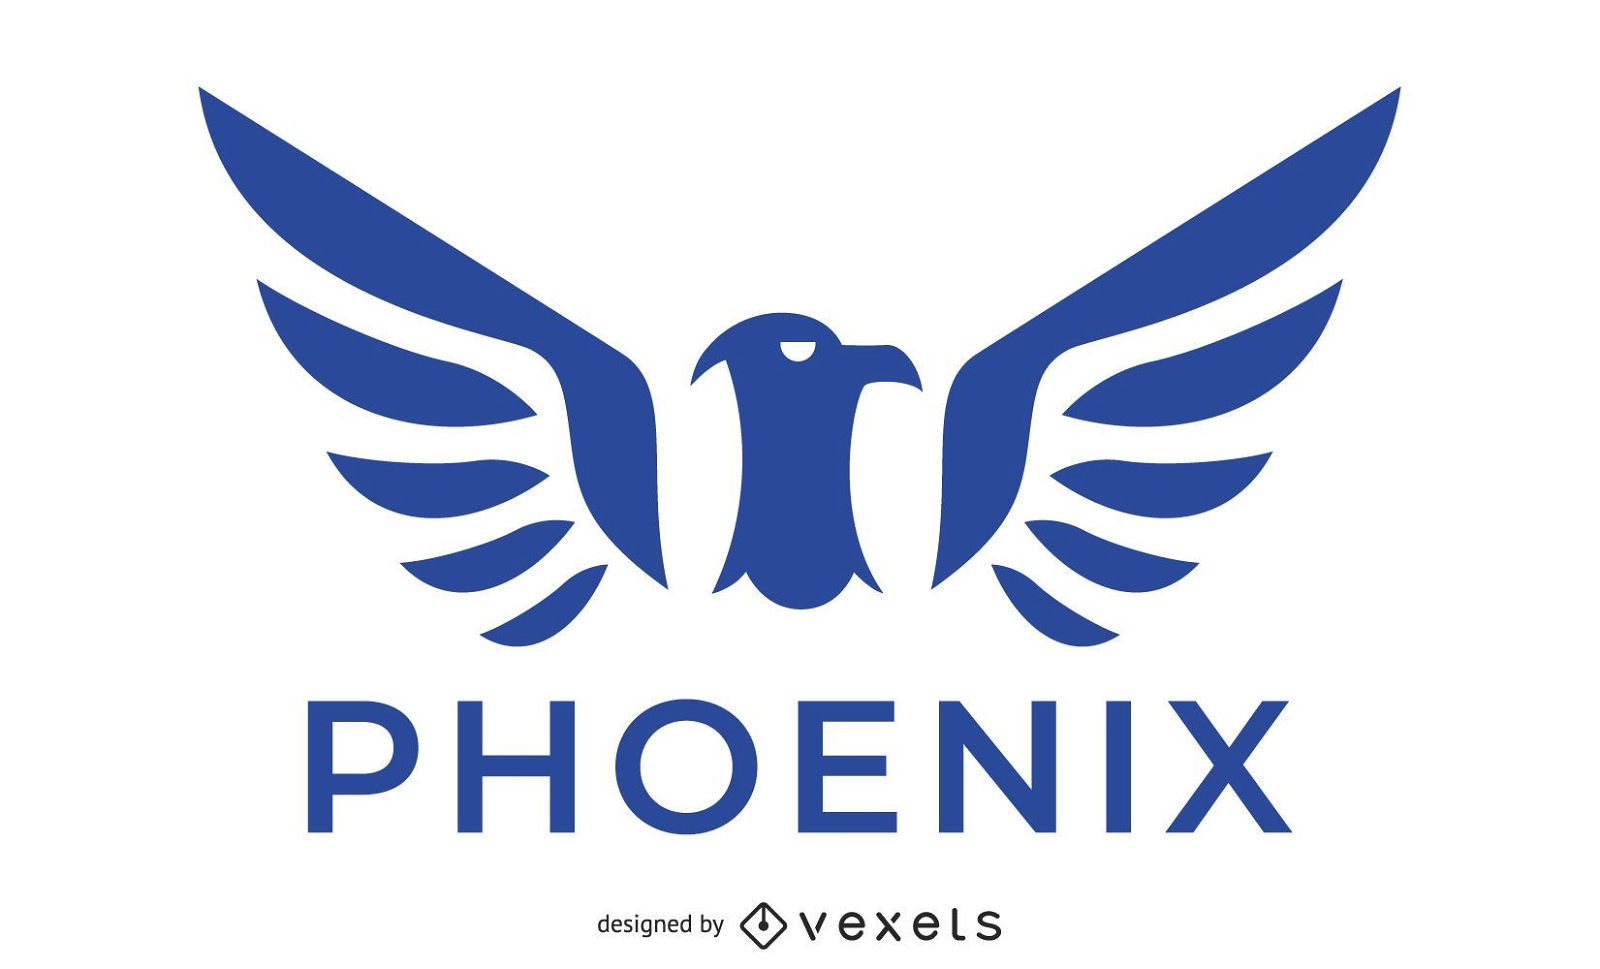 Blaues Ph?nix-Vogel-Logo